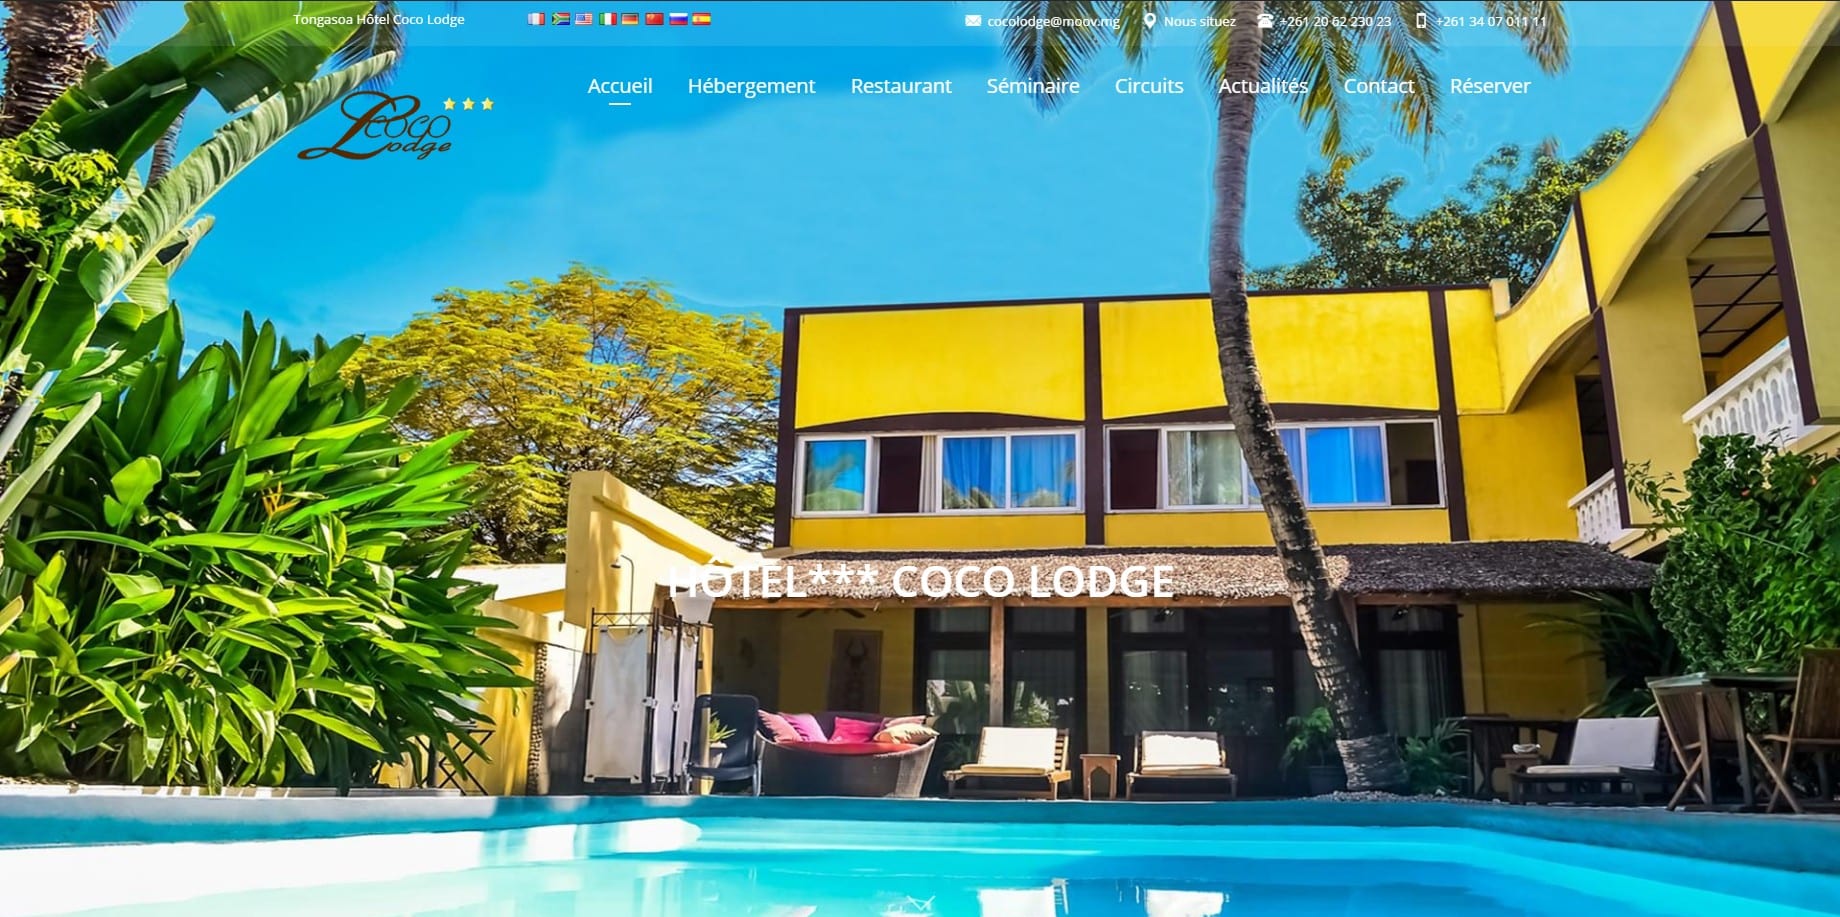 Hôtel★★★ Restaurant gourmand Coco Lodge Majunga